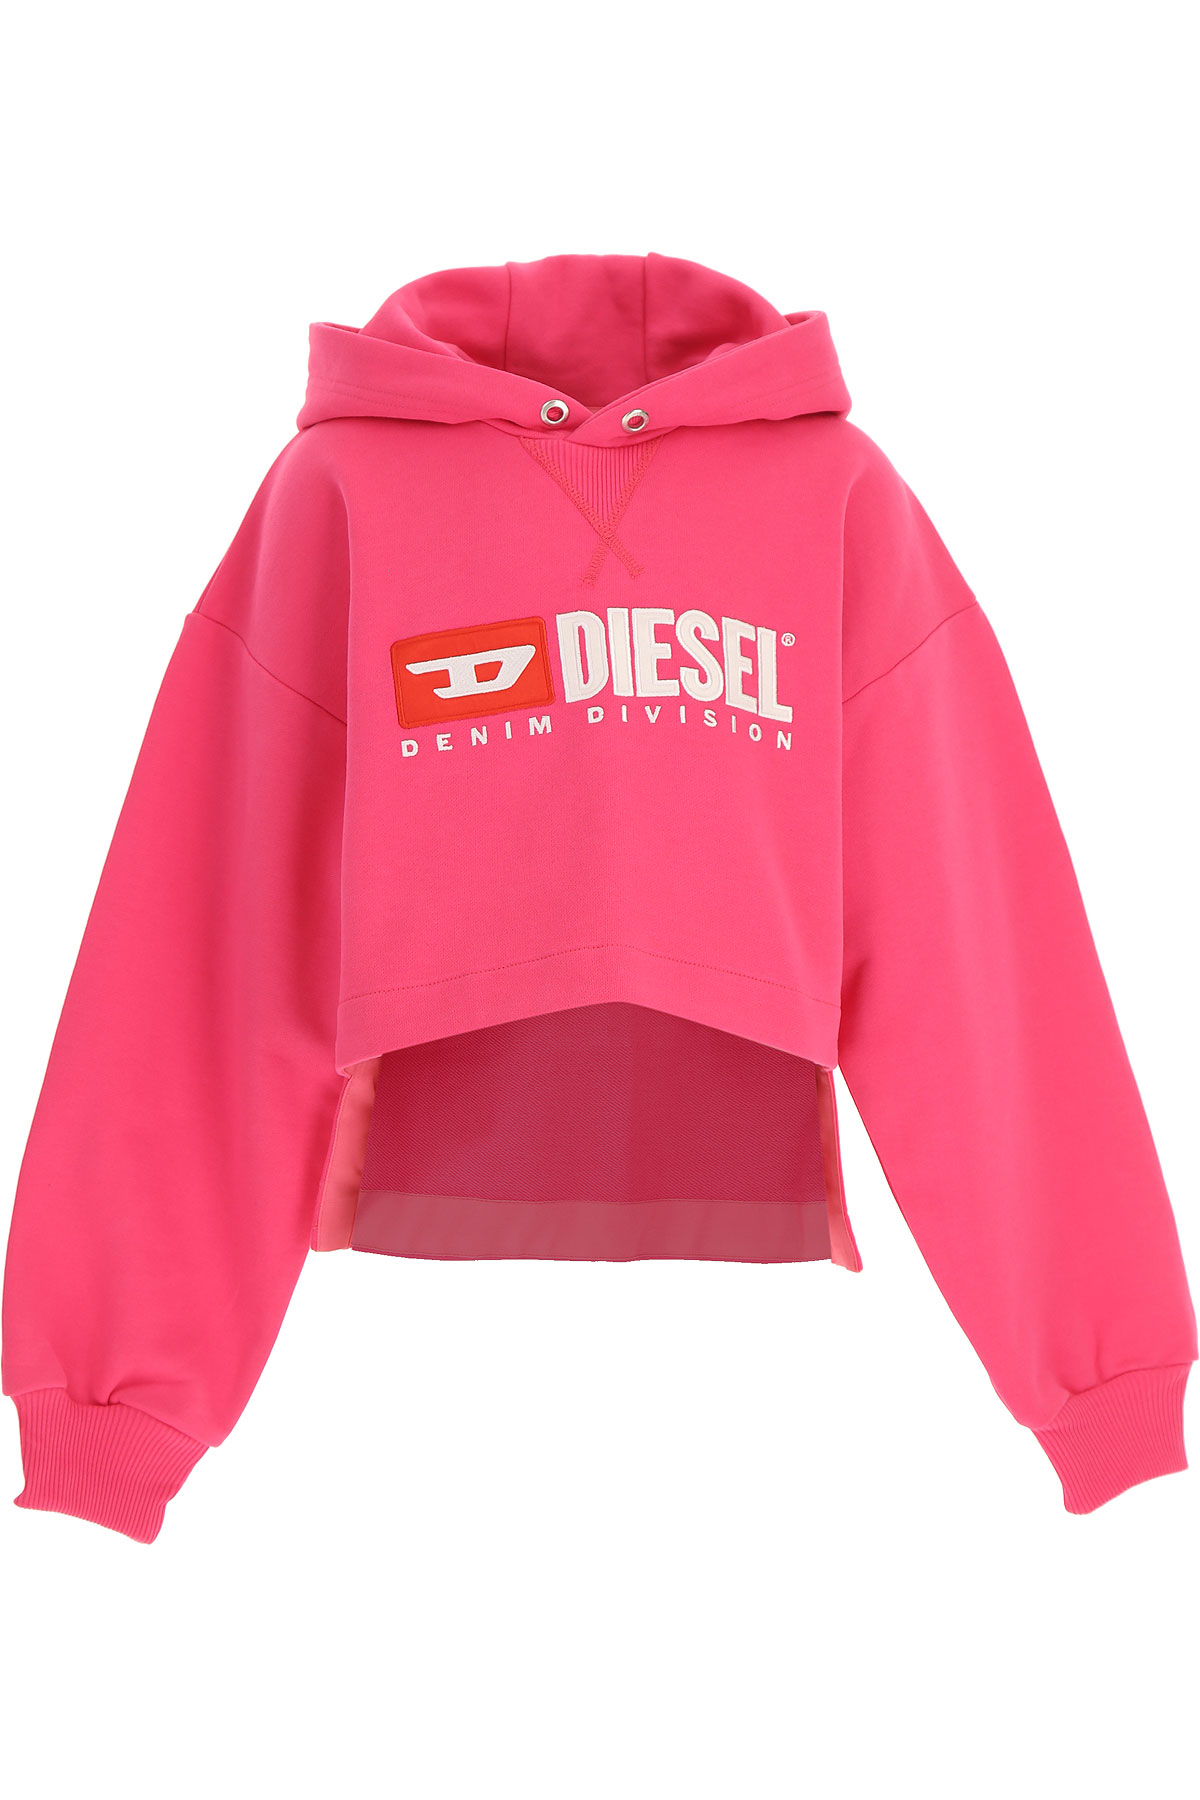 Diesel Kinder Sweatshirt & Kapuzenpullover für Mädchen Günstig im Sale, Fuchsie, Baumwolle, 2017, 10Y 12Y 14Y 16Y 4Y 6Y 8Y